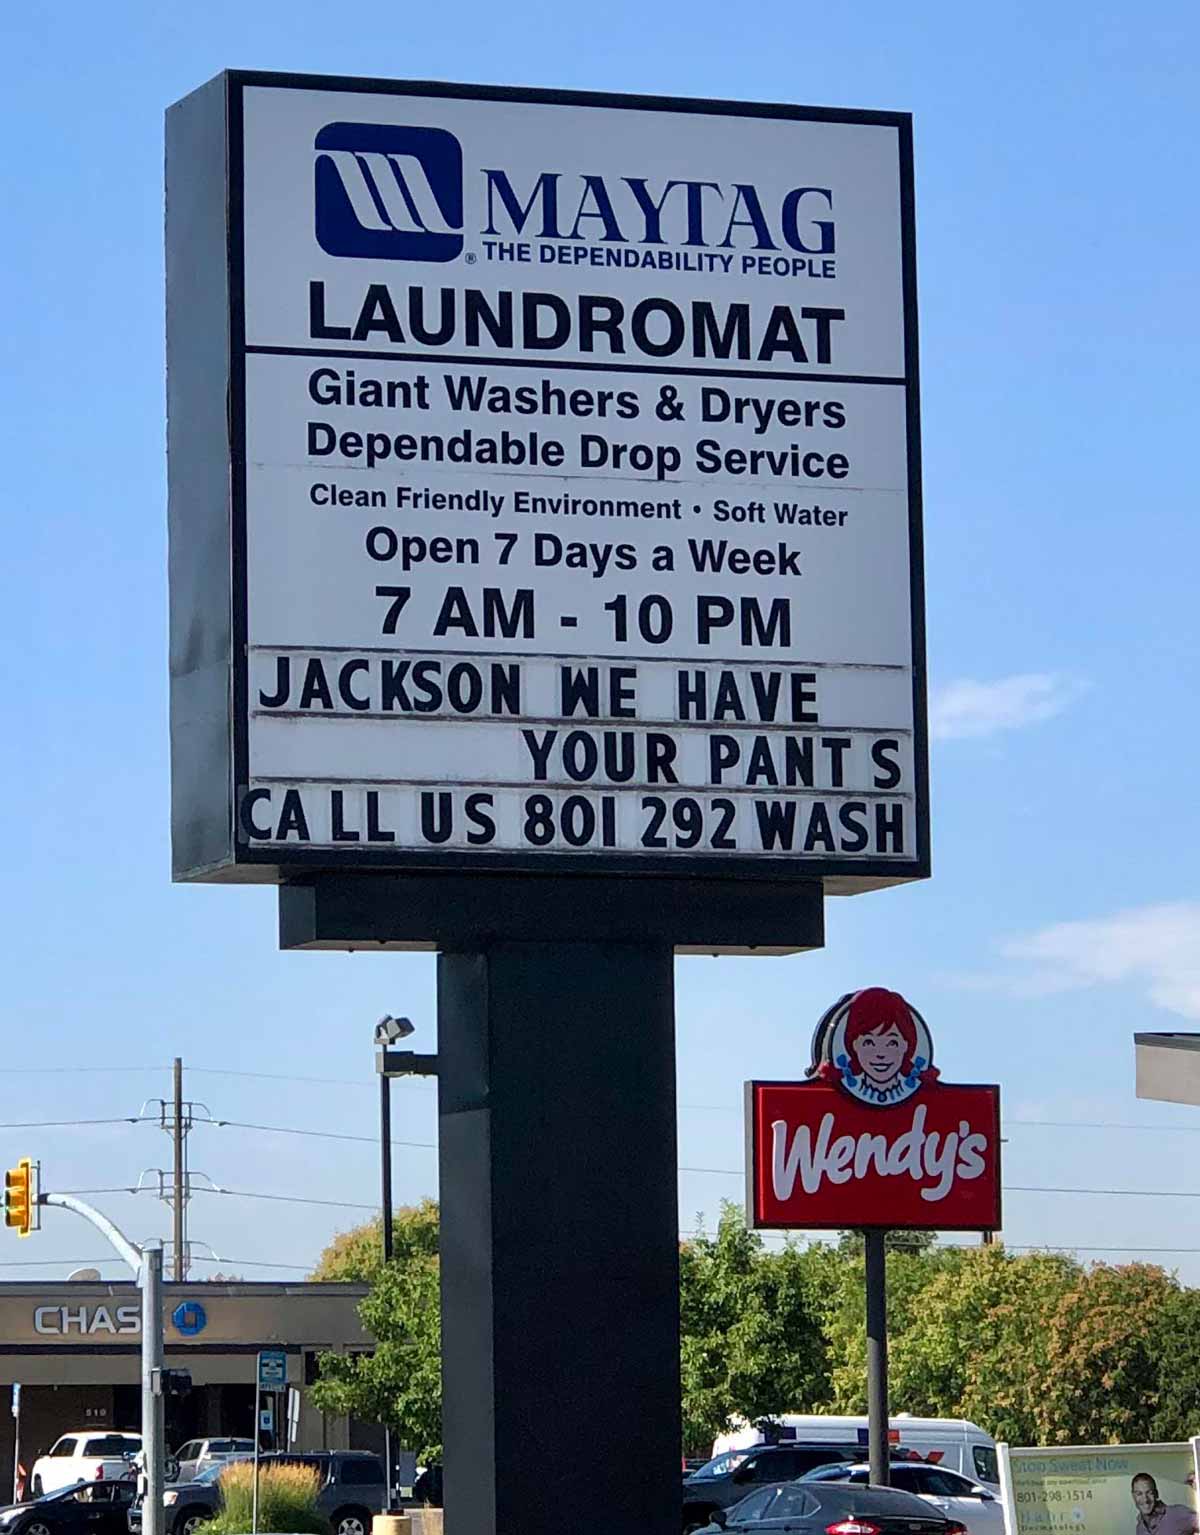 My local laundromat